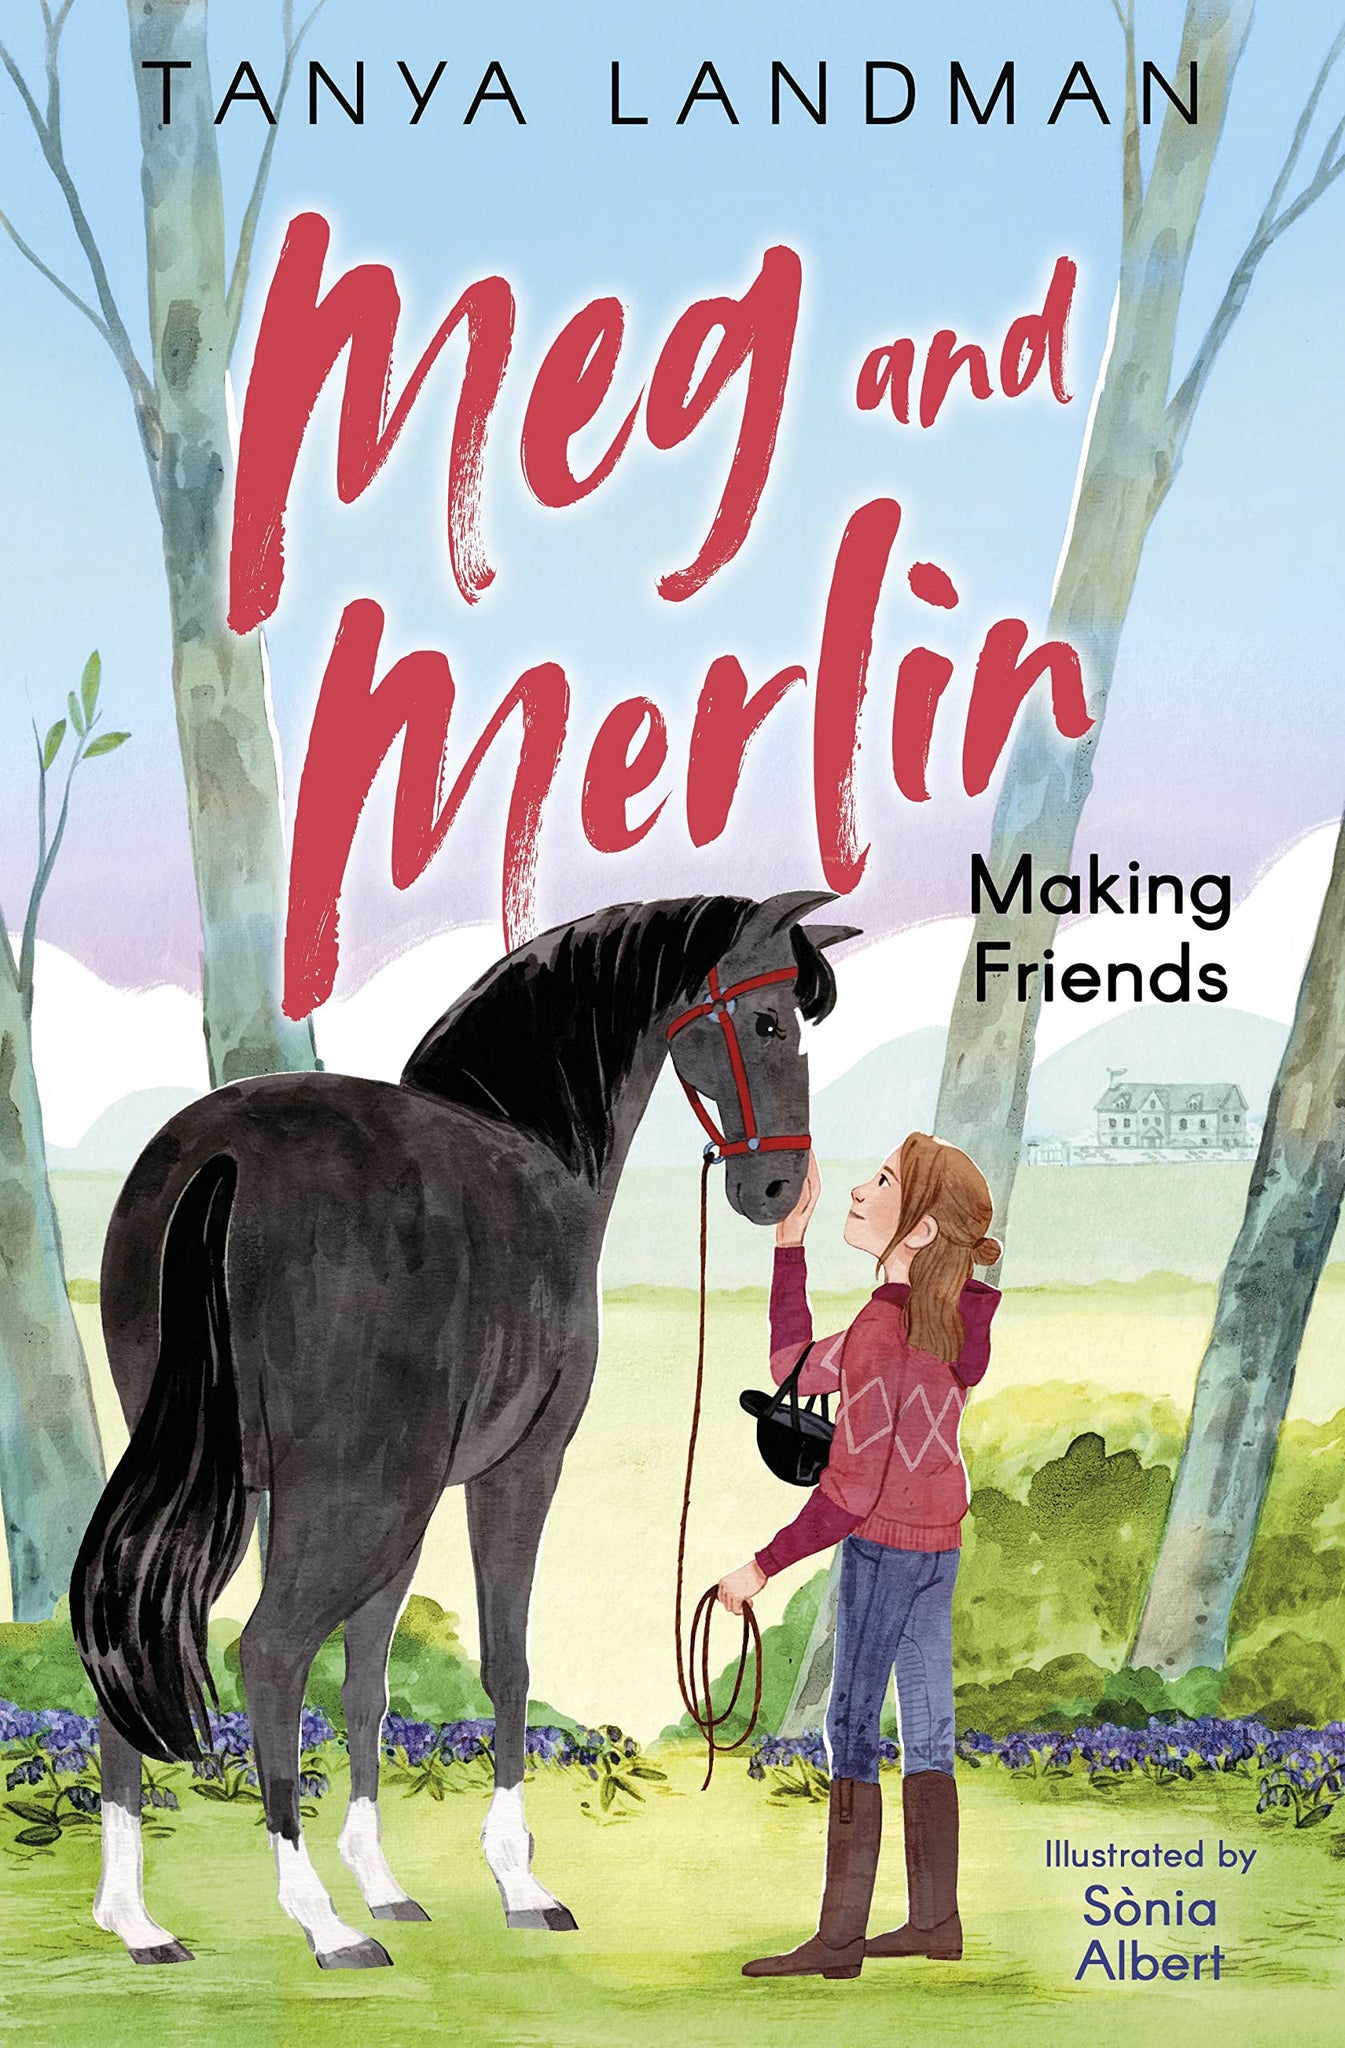 Meg and Merlin: Making Friends (4u2read)